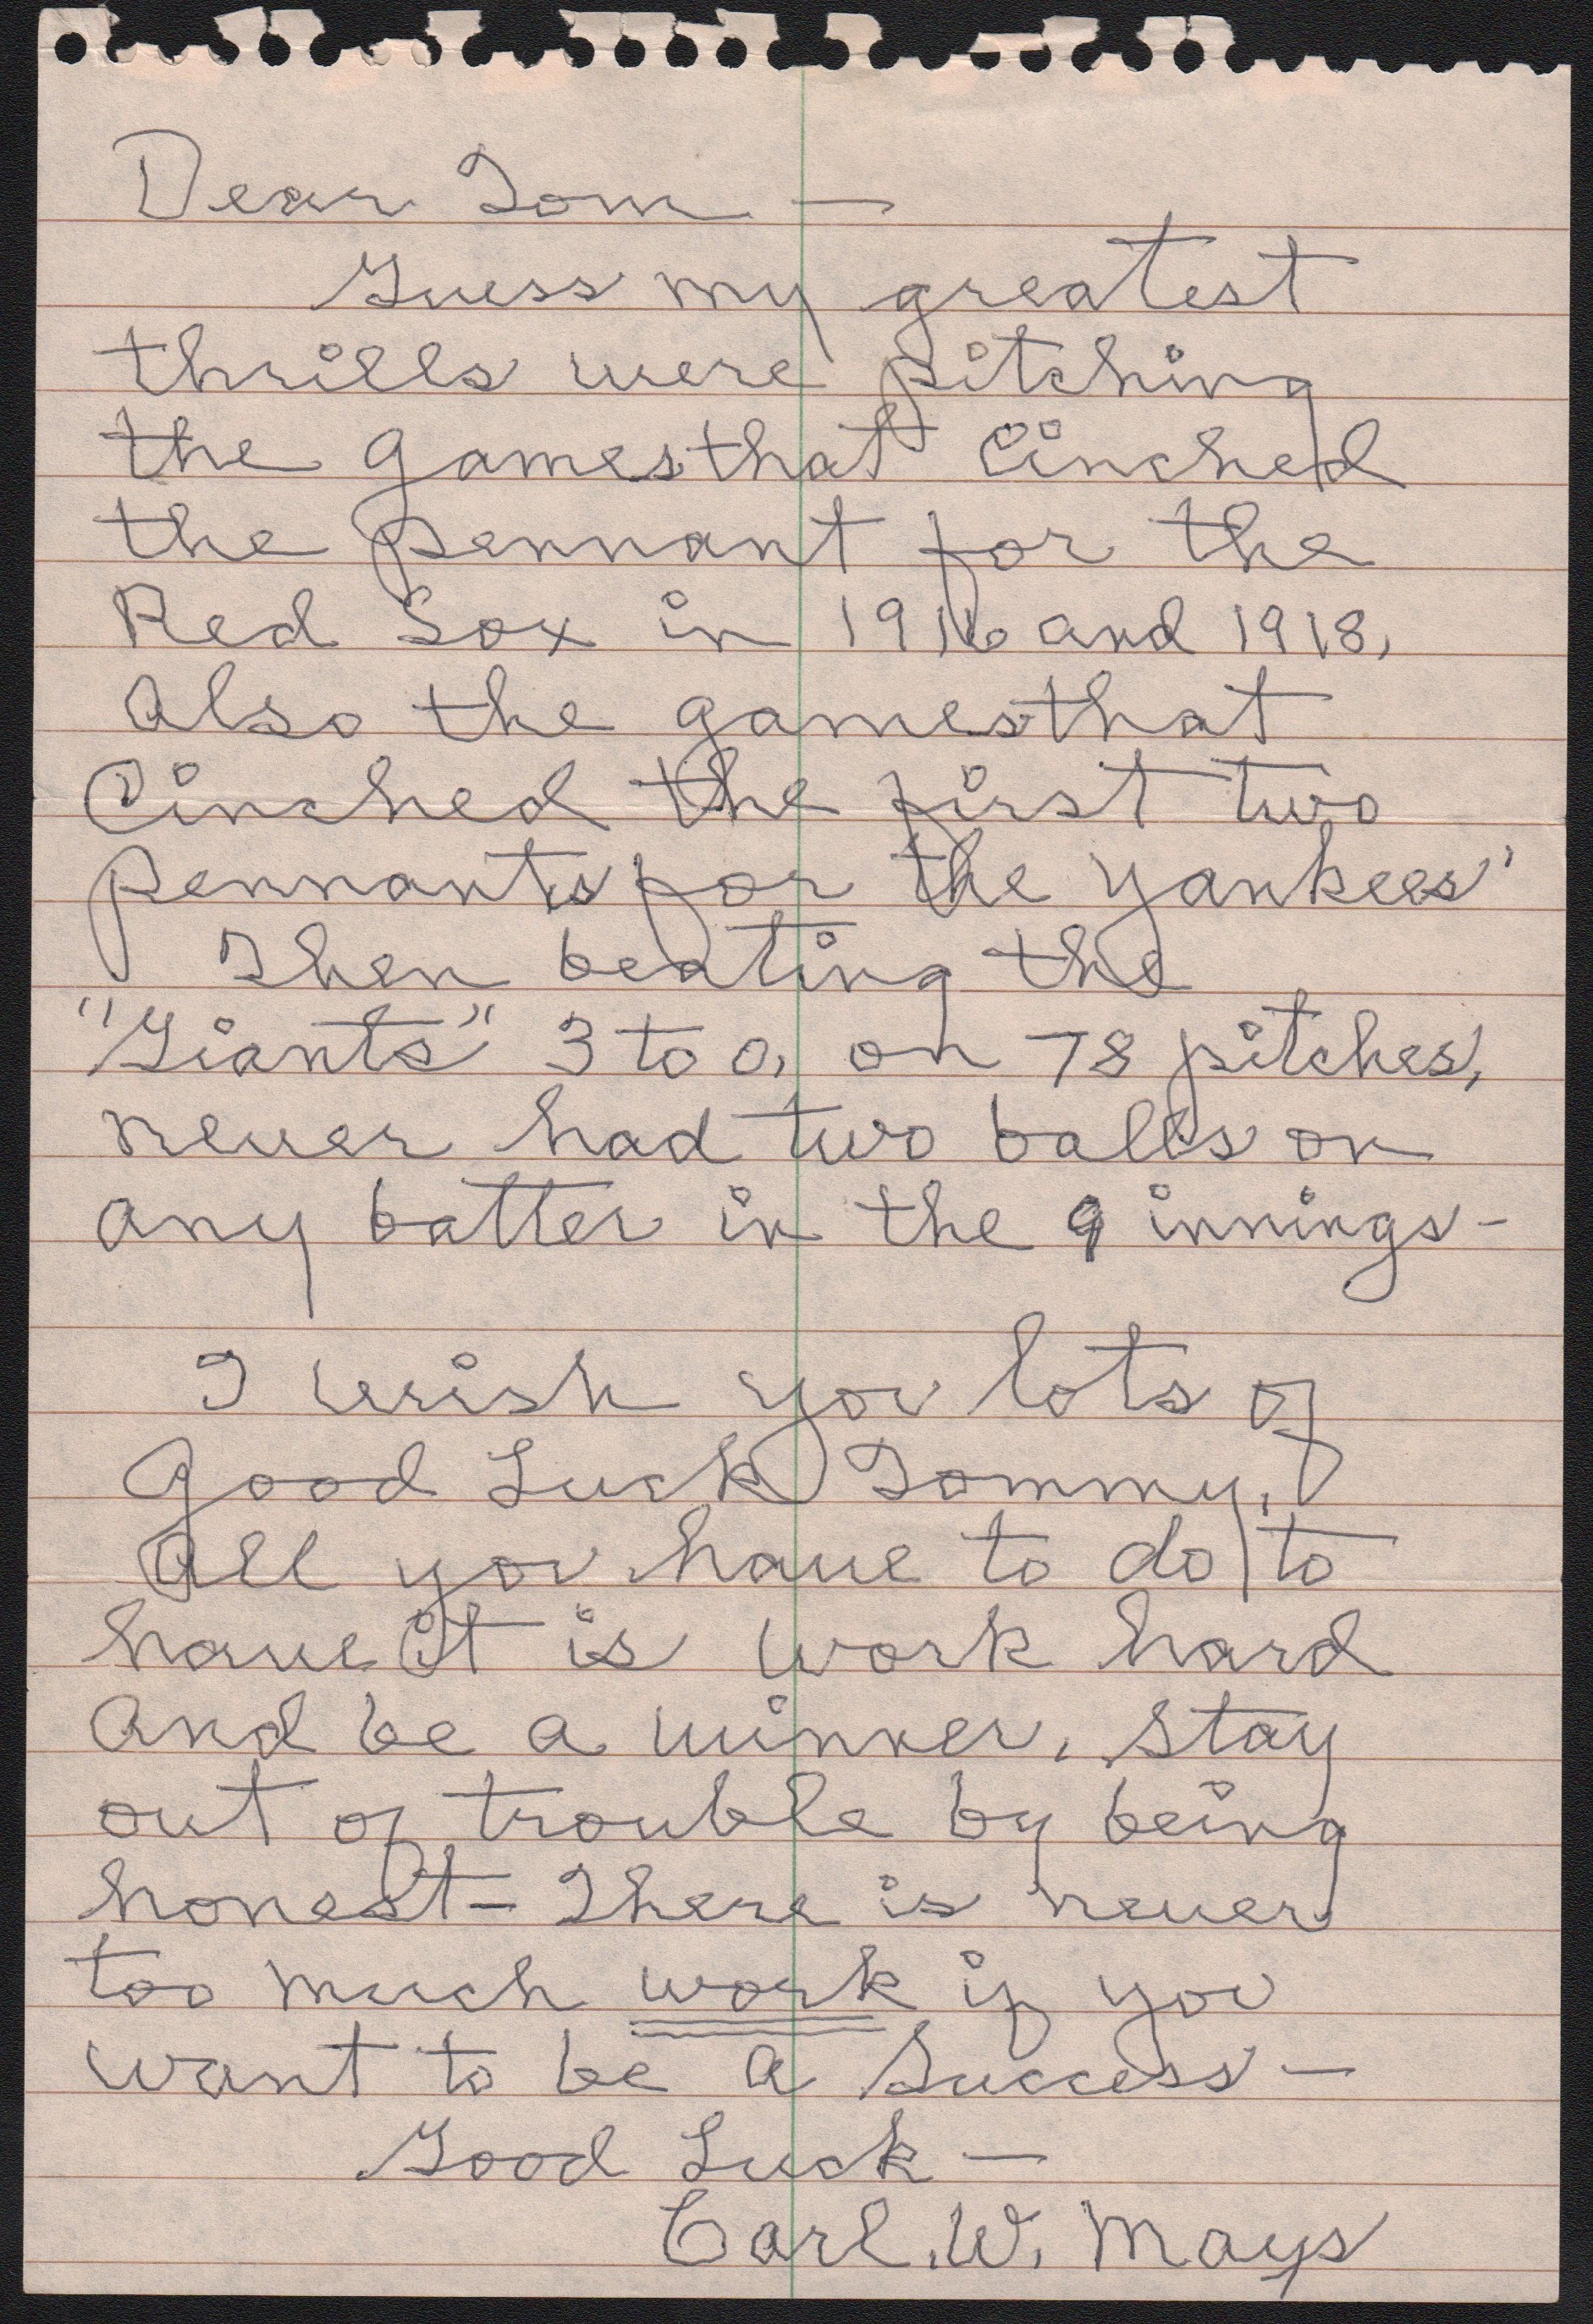 - Carl W. Mays "Greatest Thrill" Handwritten Letter